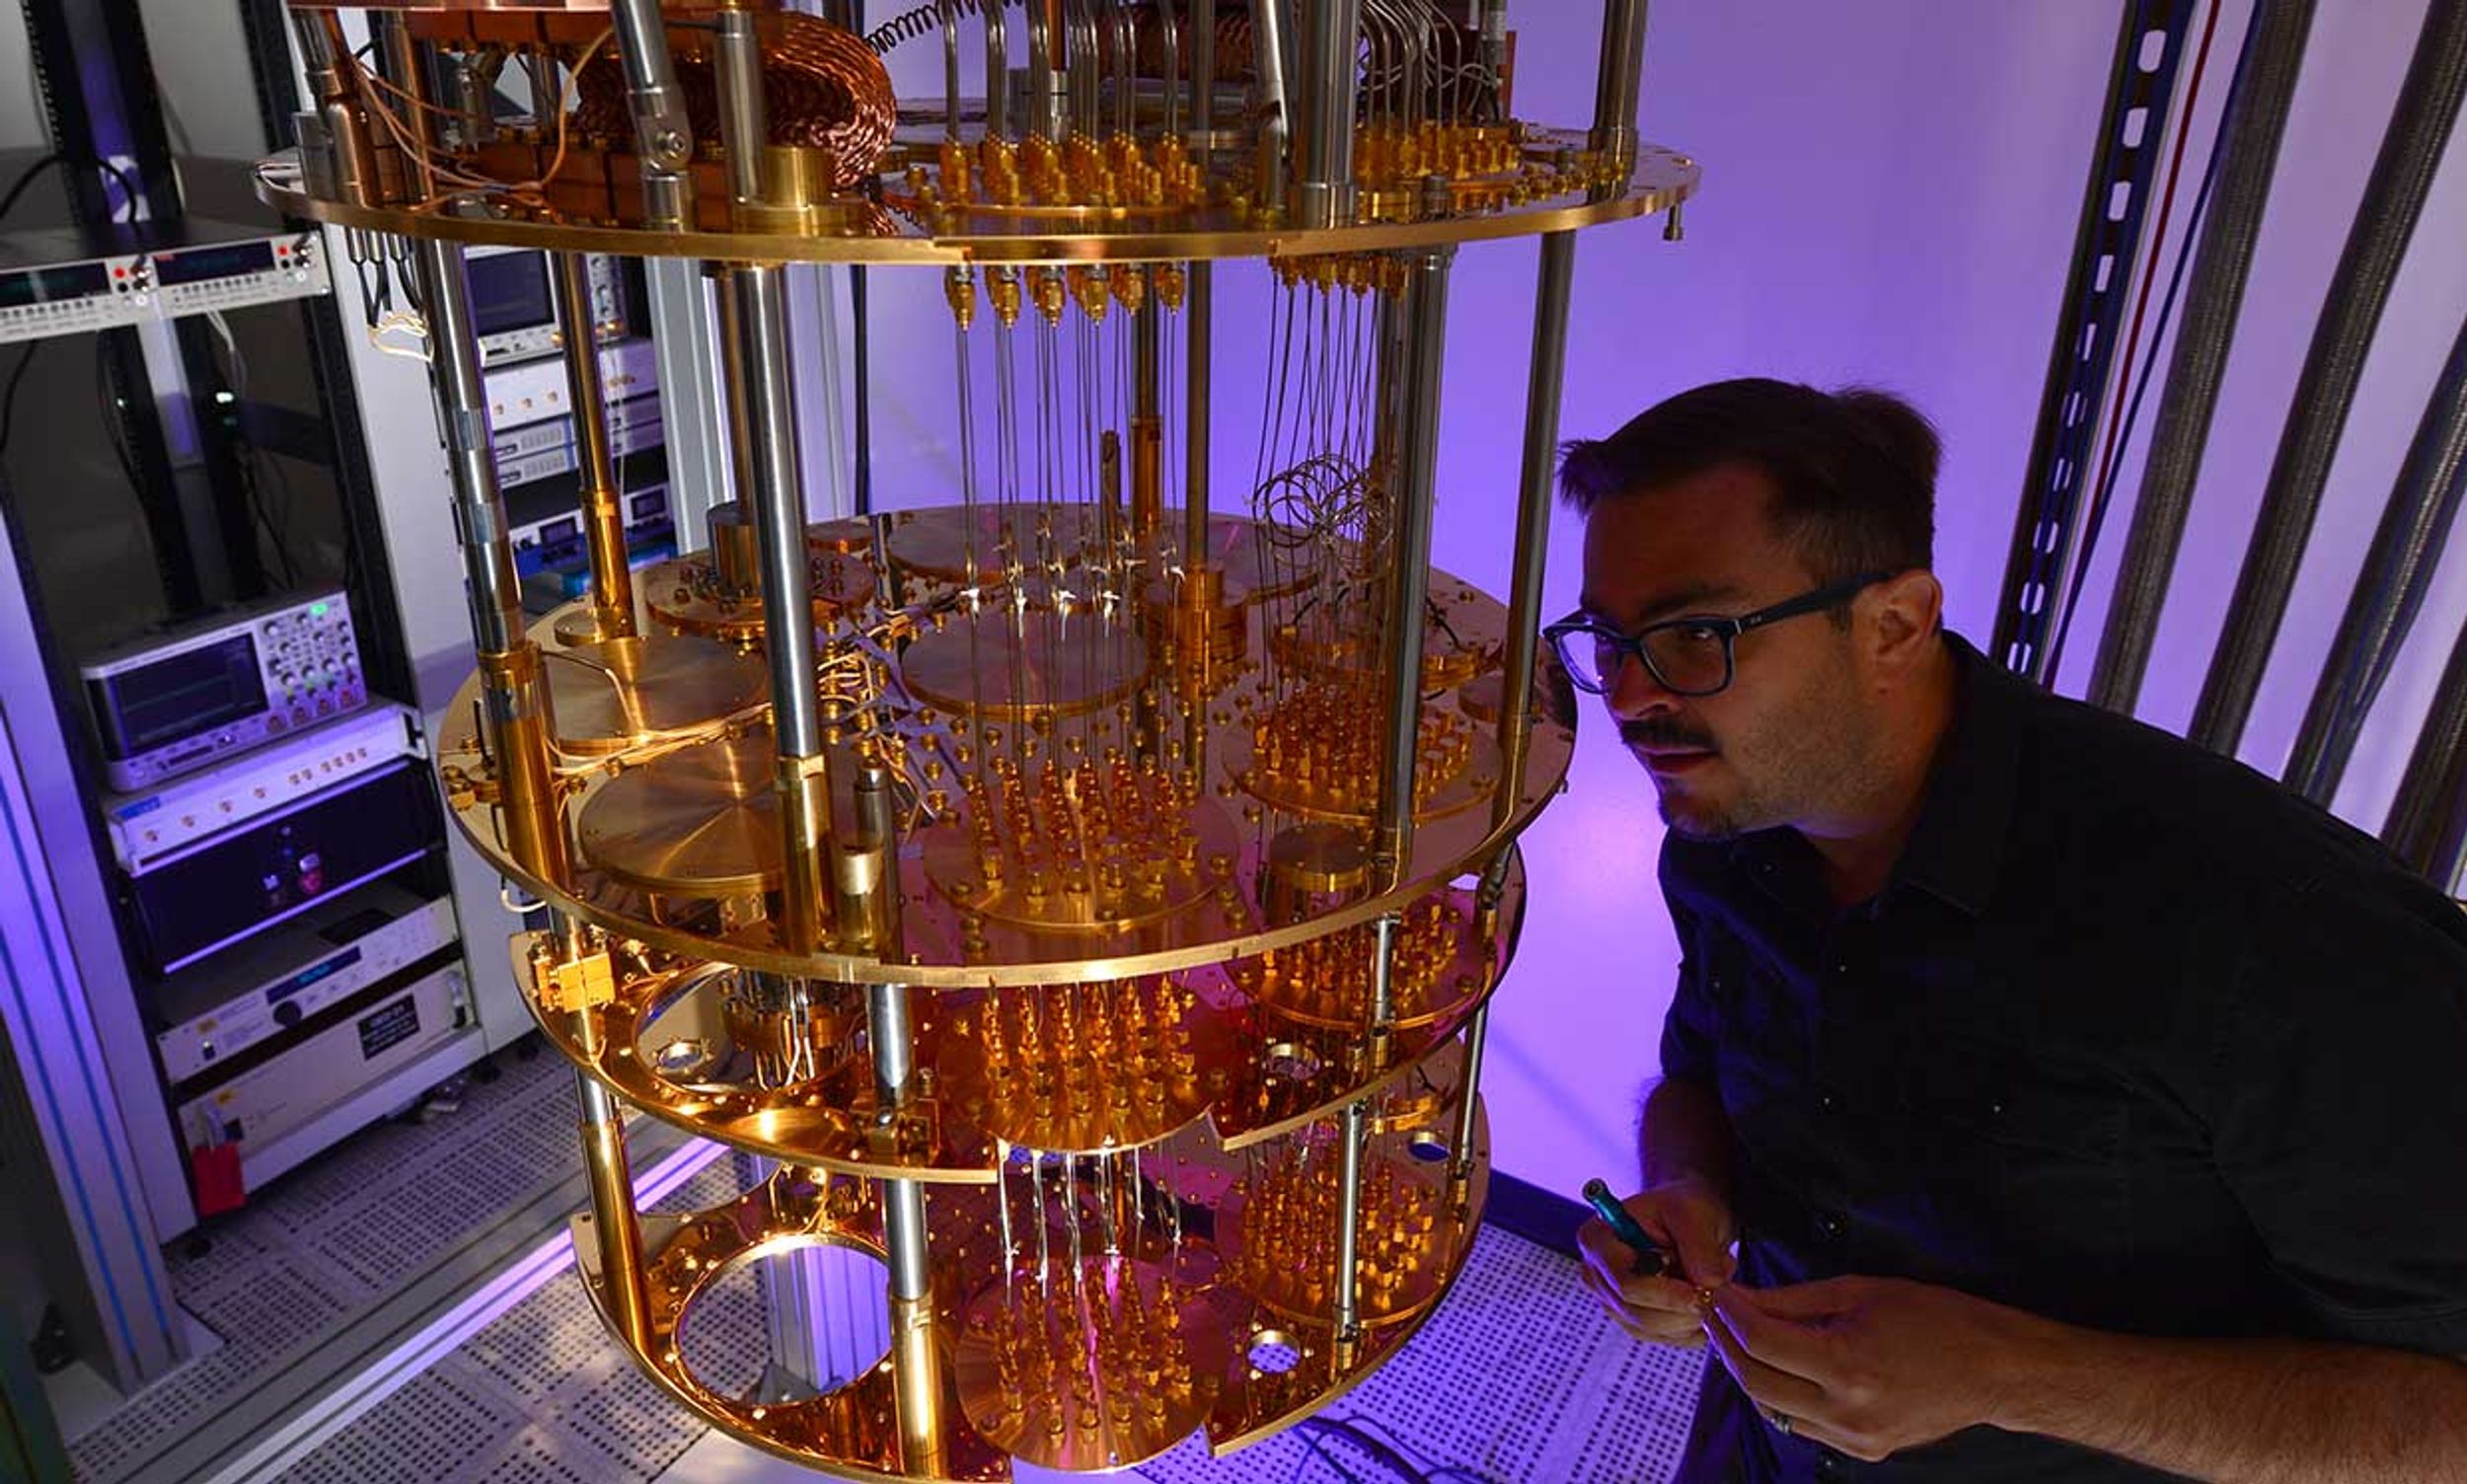 Intel quantum computing researcher David Michalak inspects part of a quantum computing system at the company’s Hillsboro, Ore., campus.